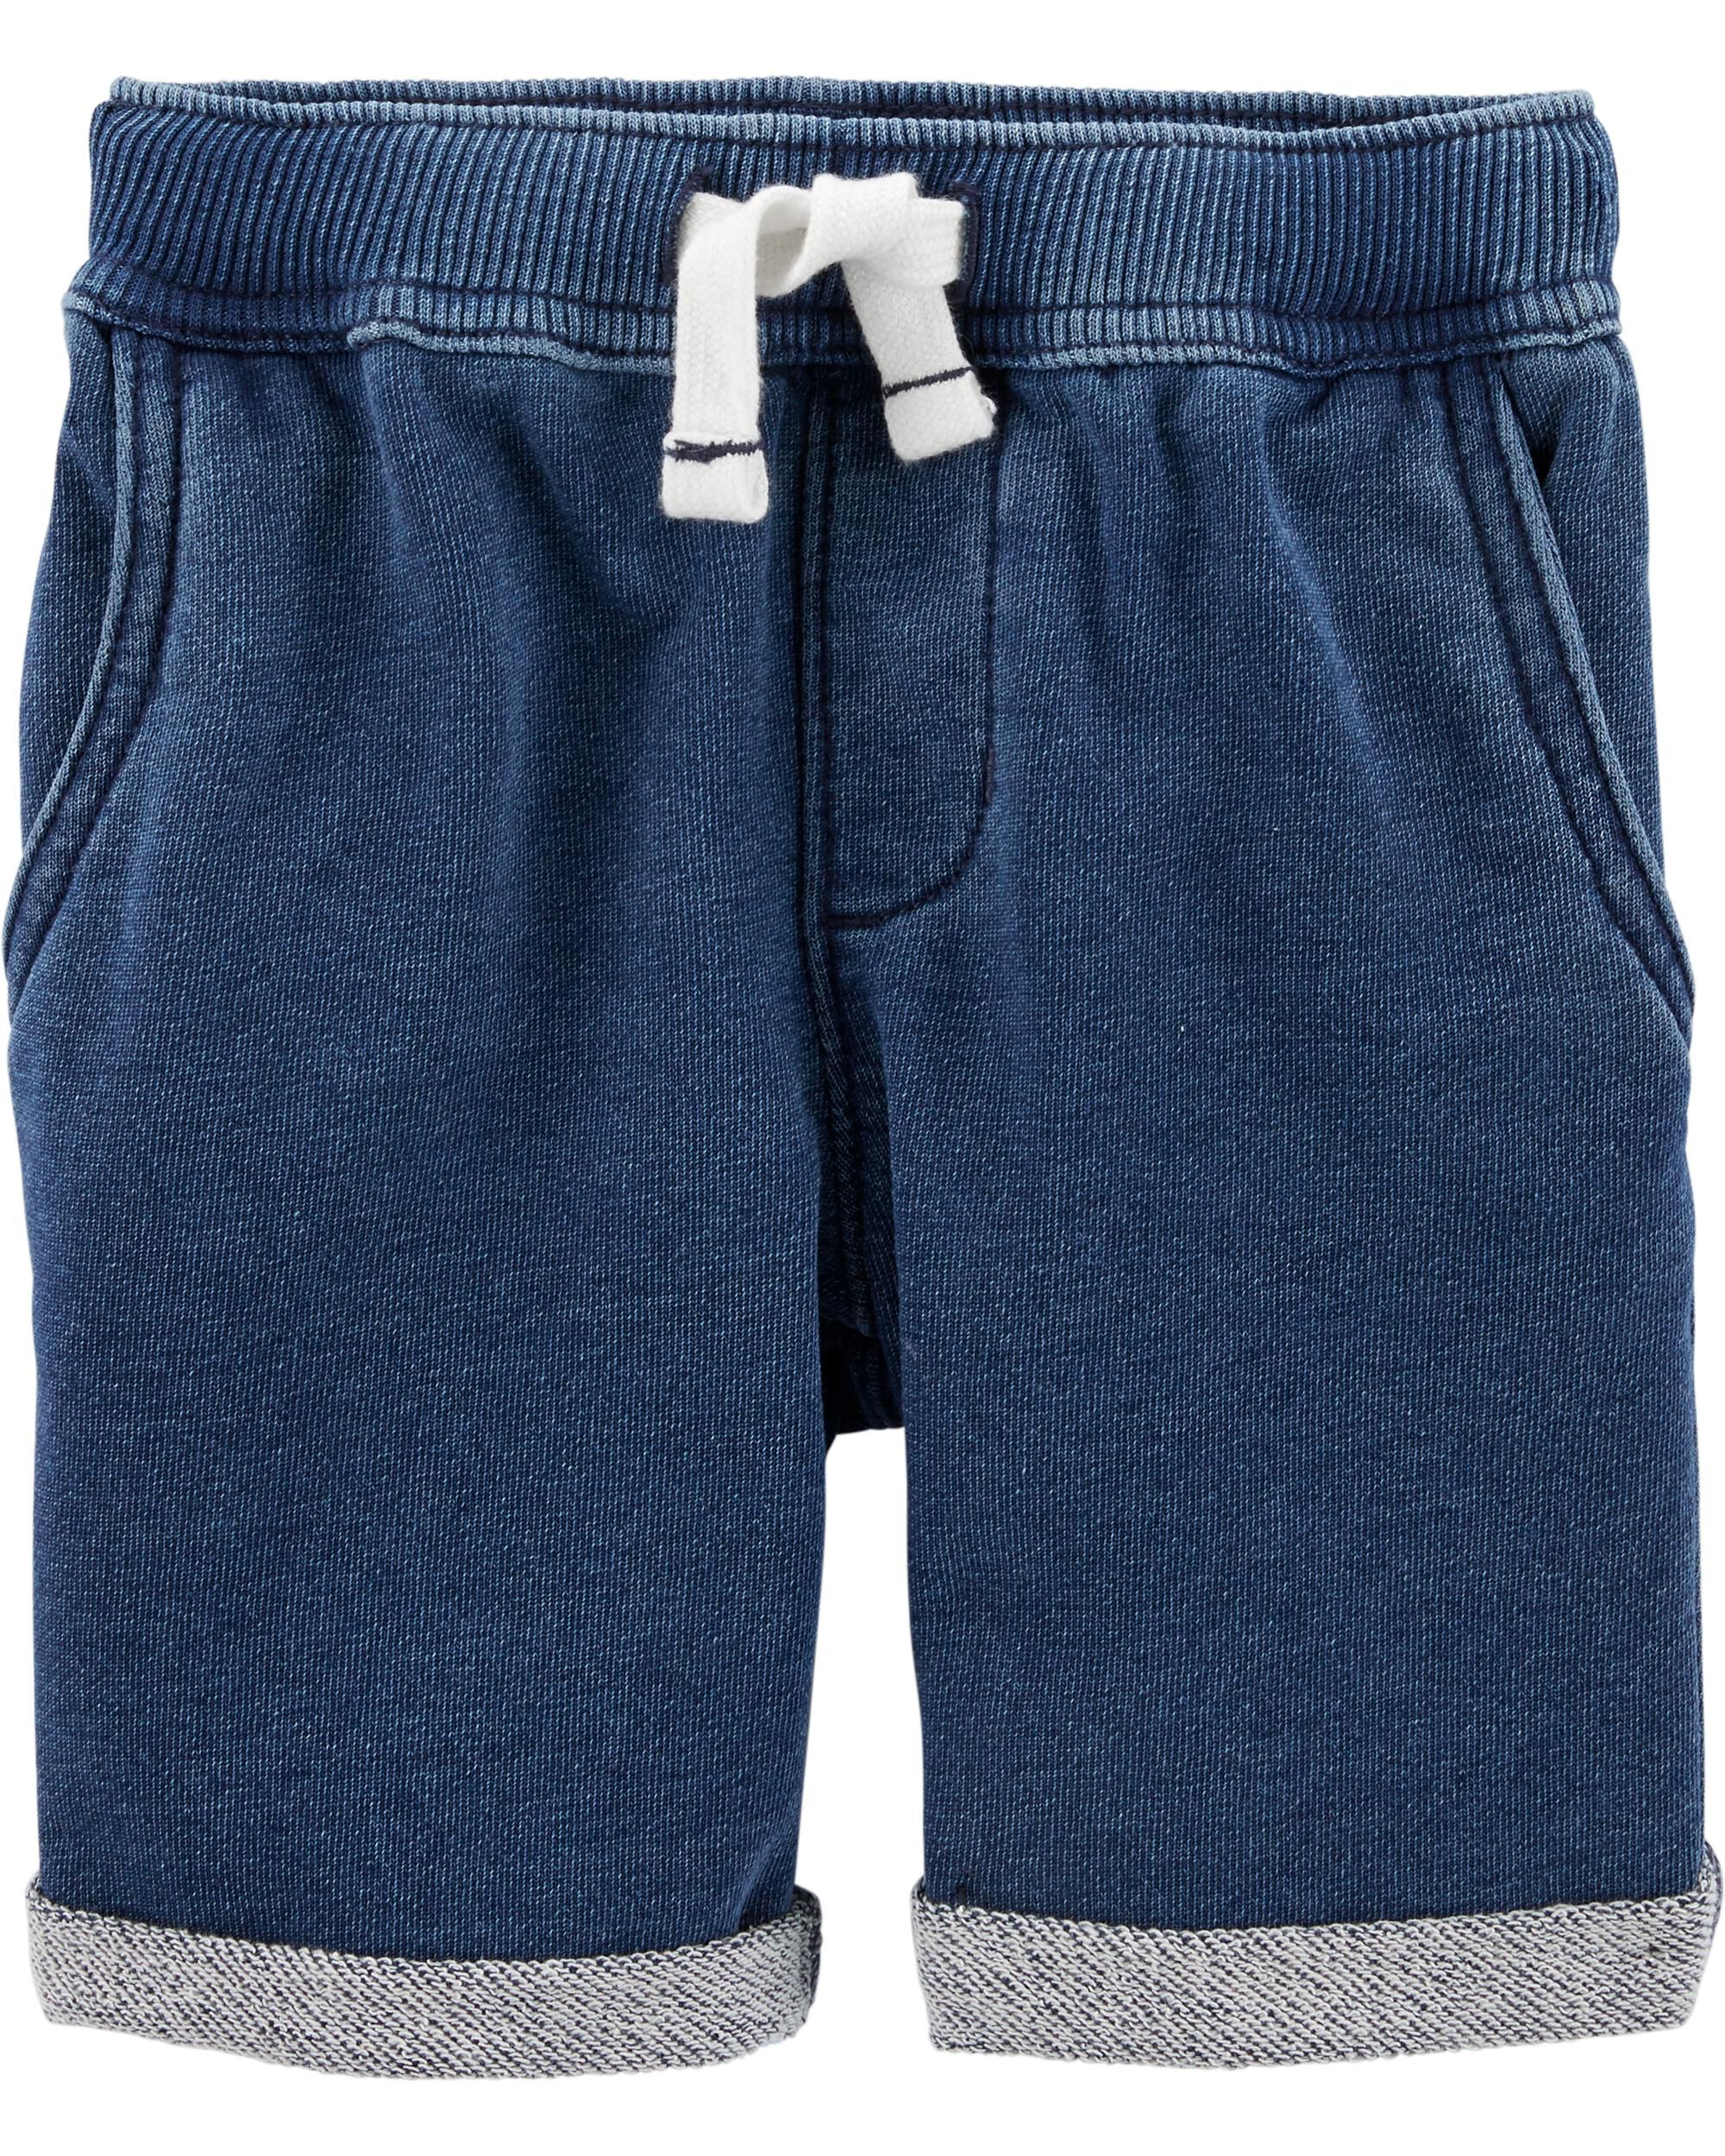 Carters Baby Boys Pull-On Knit Denim Short